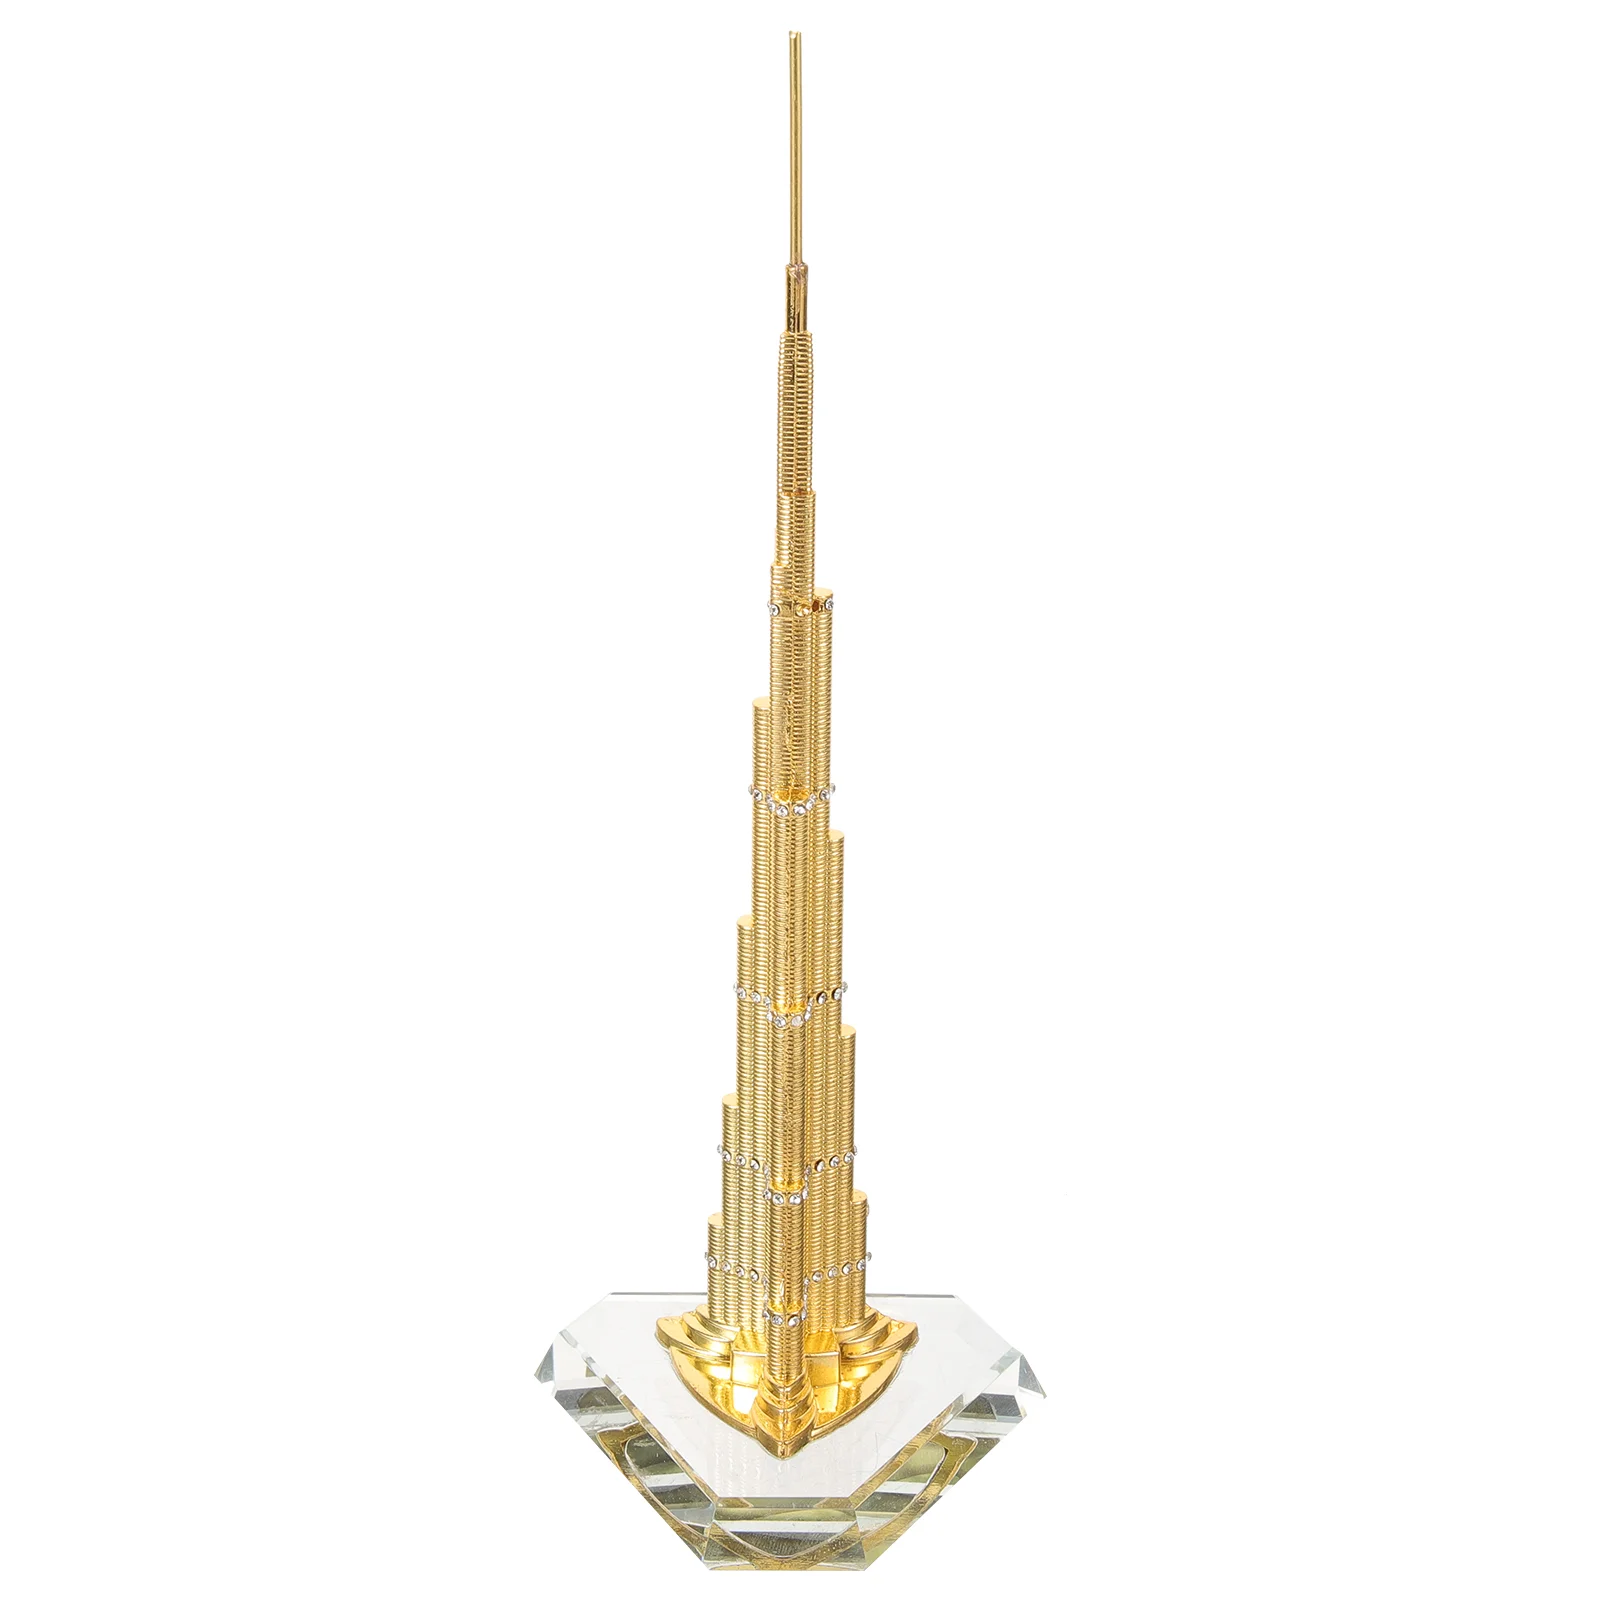 

Unique Craft Desktop Ornament Home Decor Metal Building Model Tower Decorative Sculptures Gift Figurine